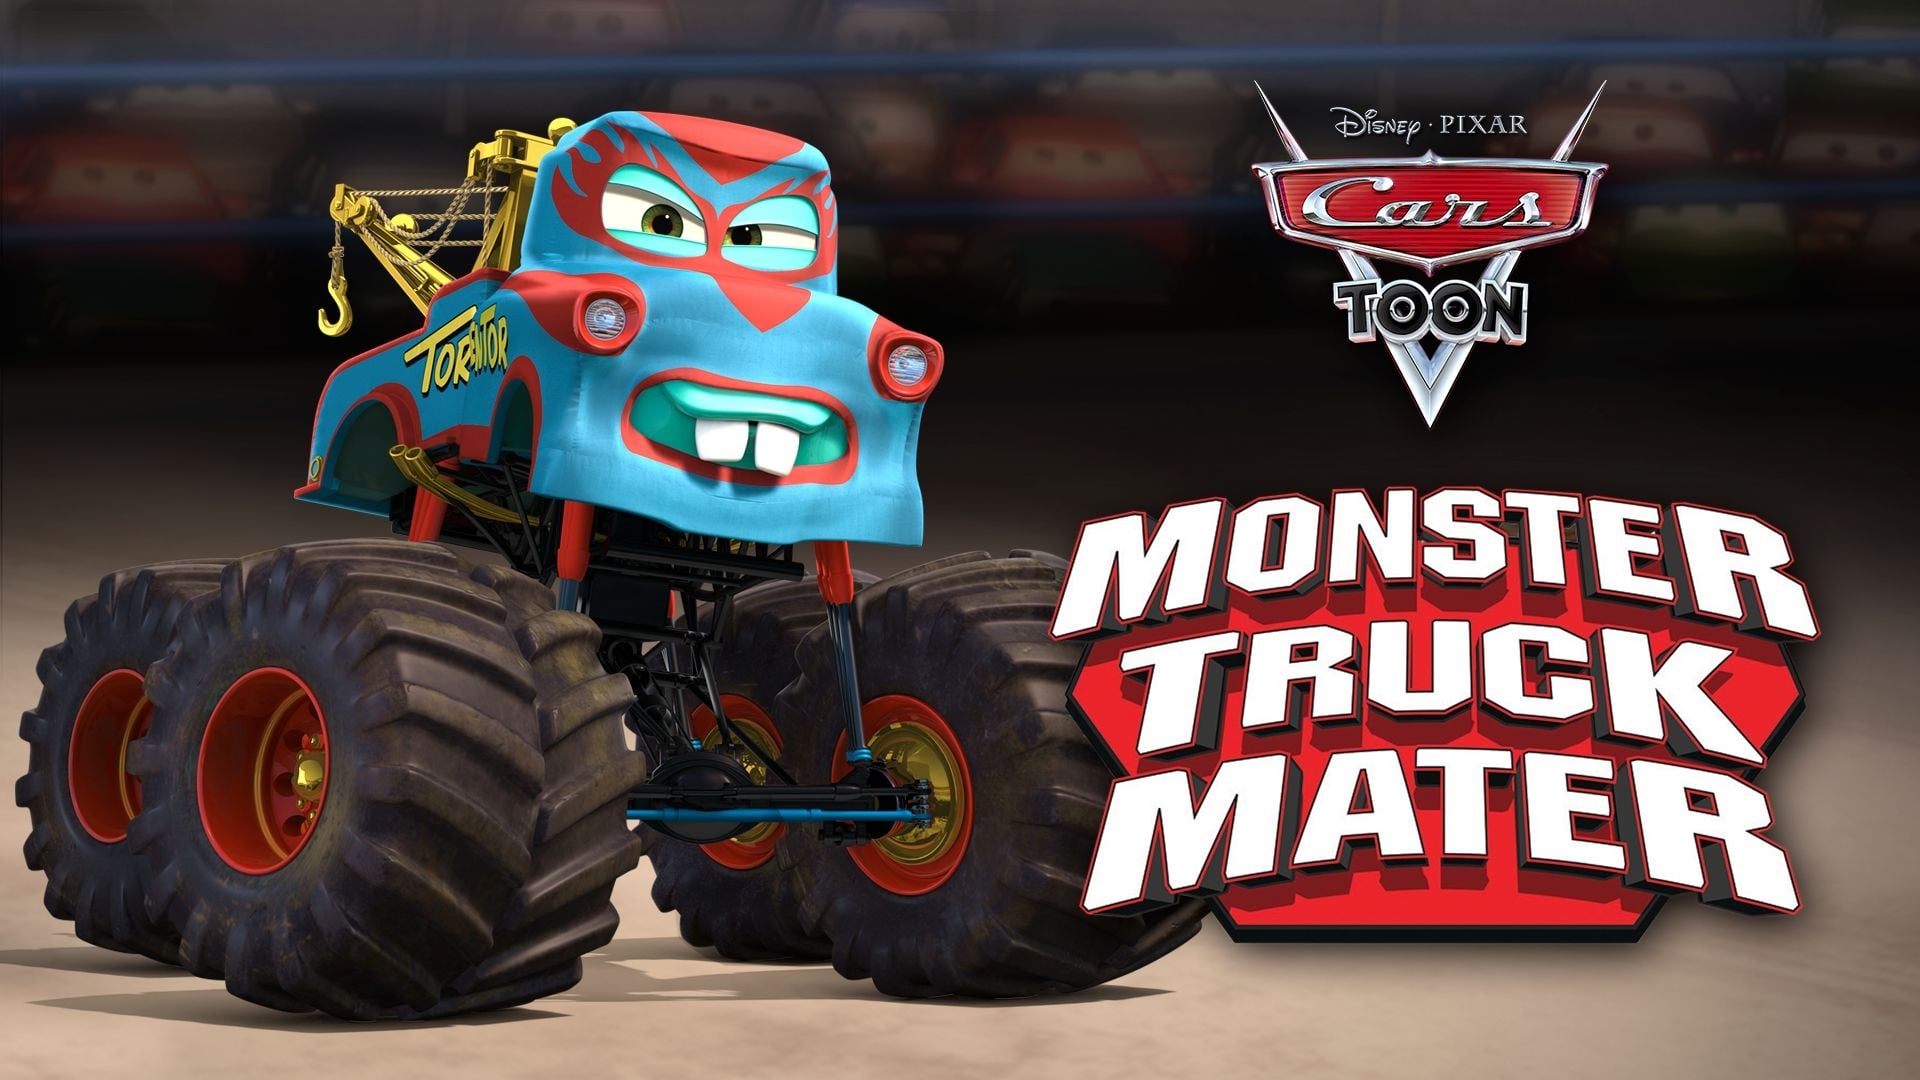 Los cuentos de Mate: Monster Truck Mate